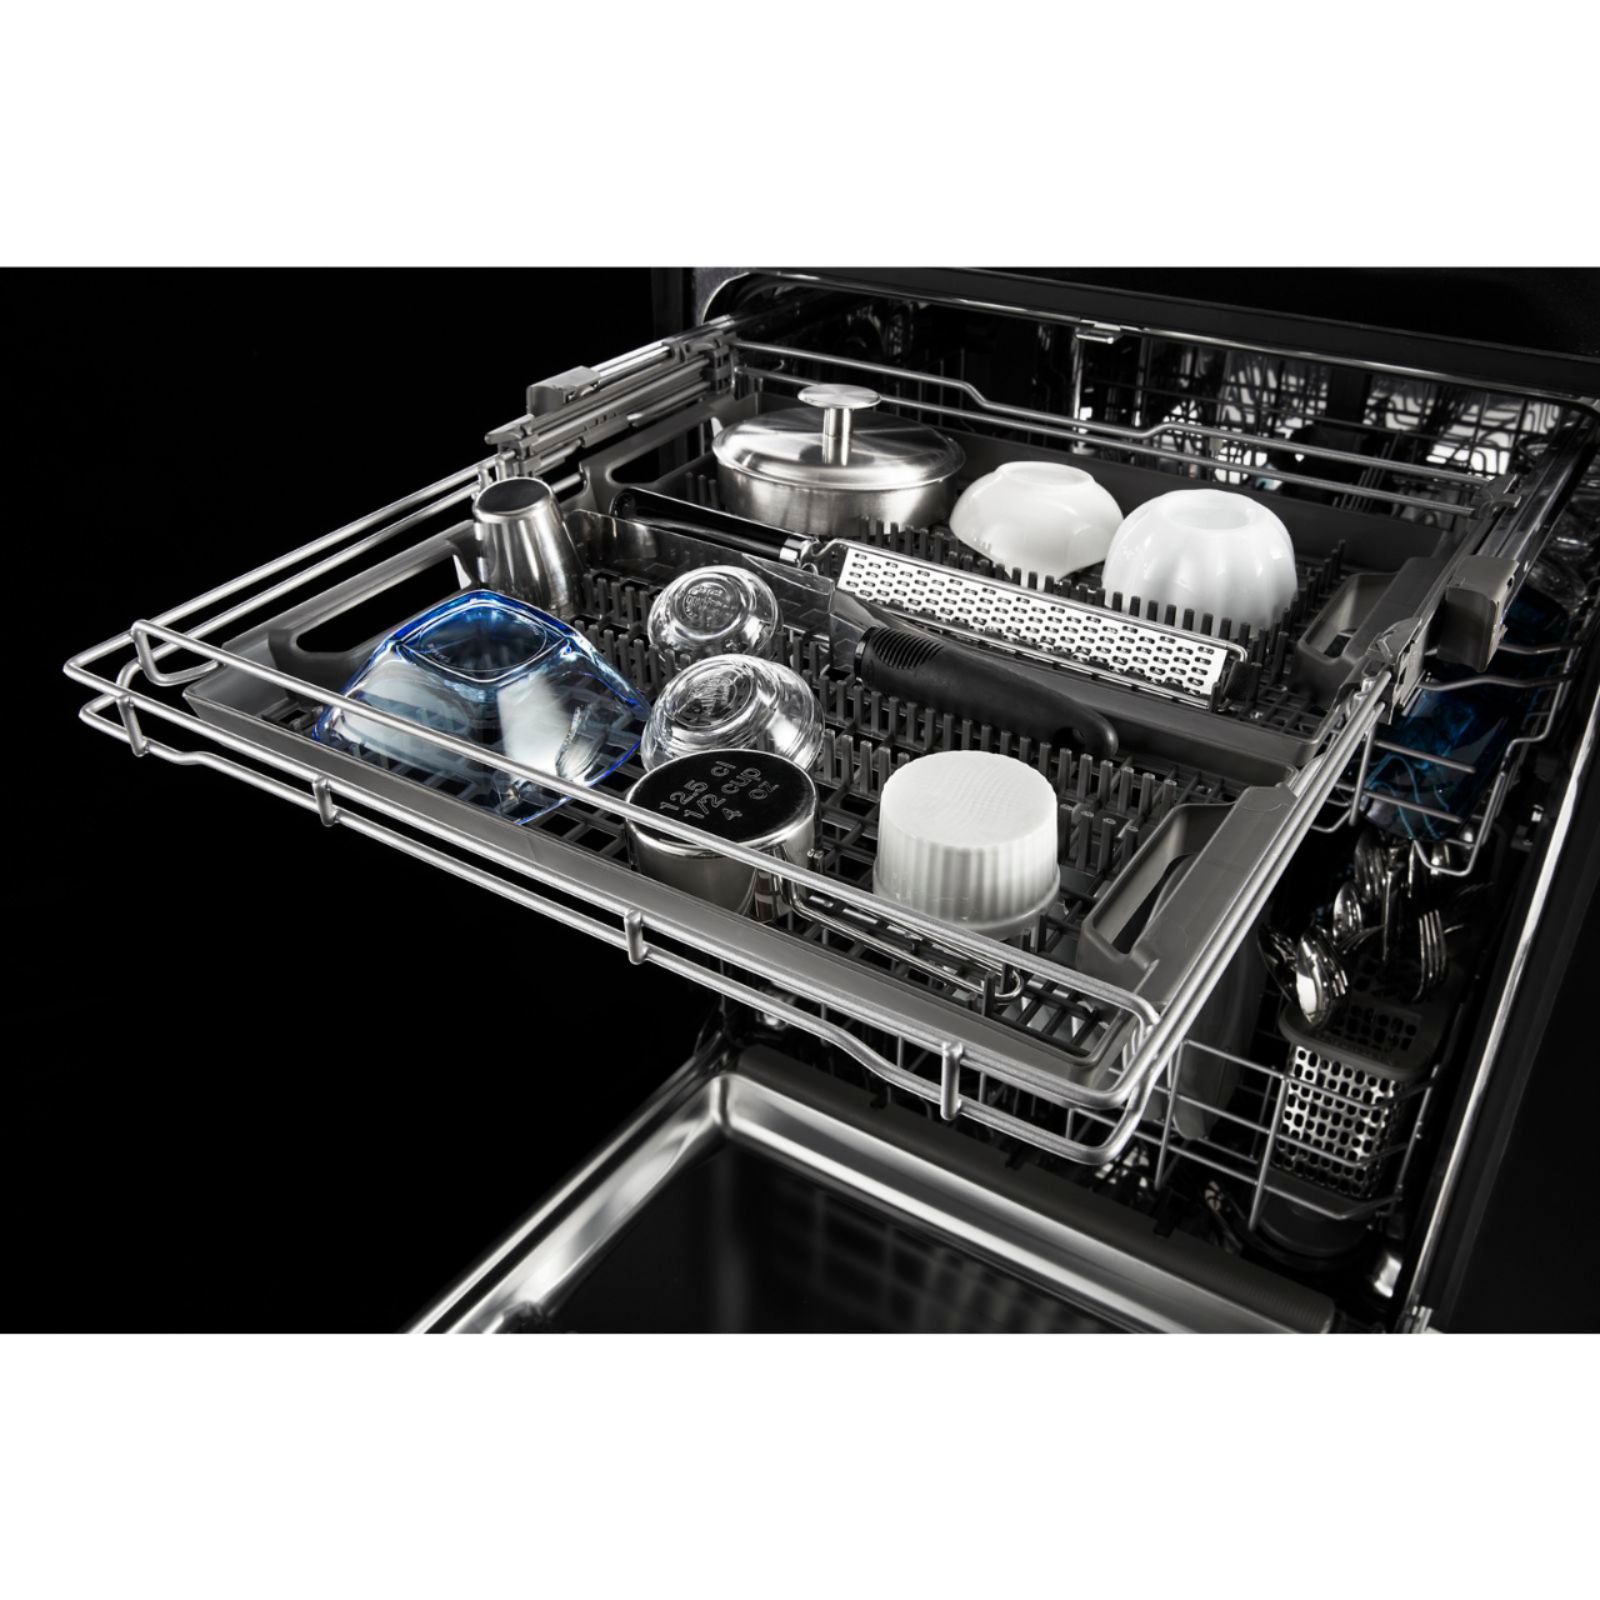 maytag dishwasher reviews 2018